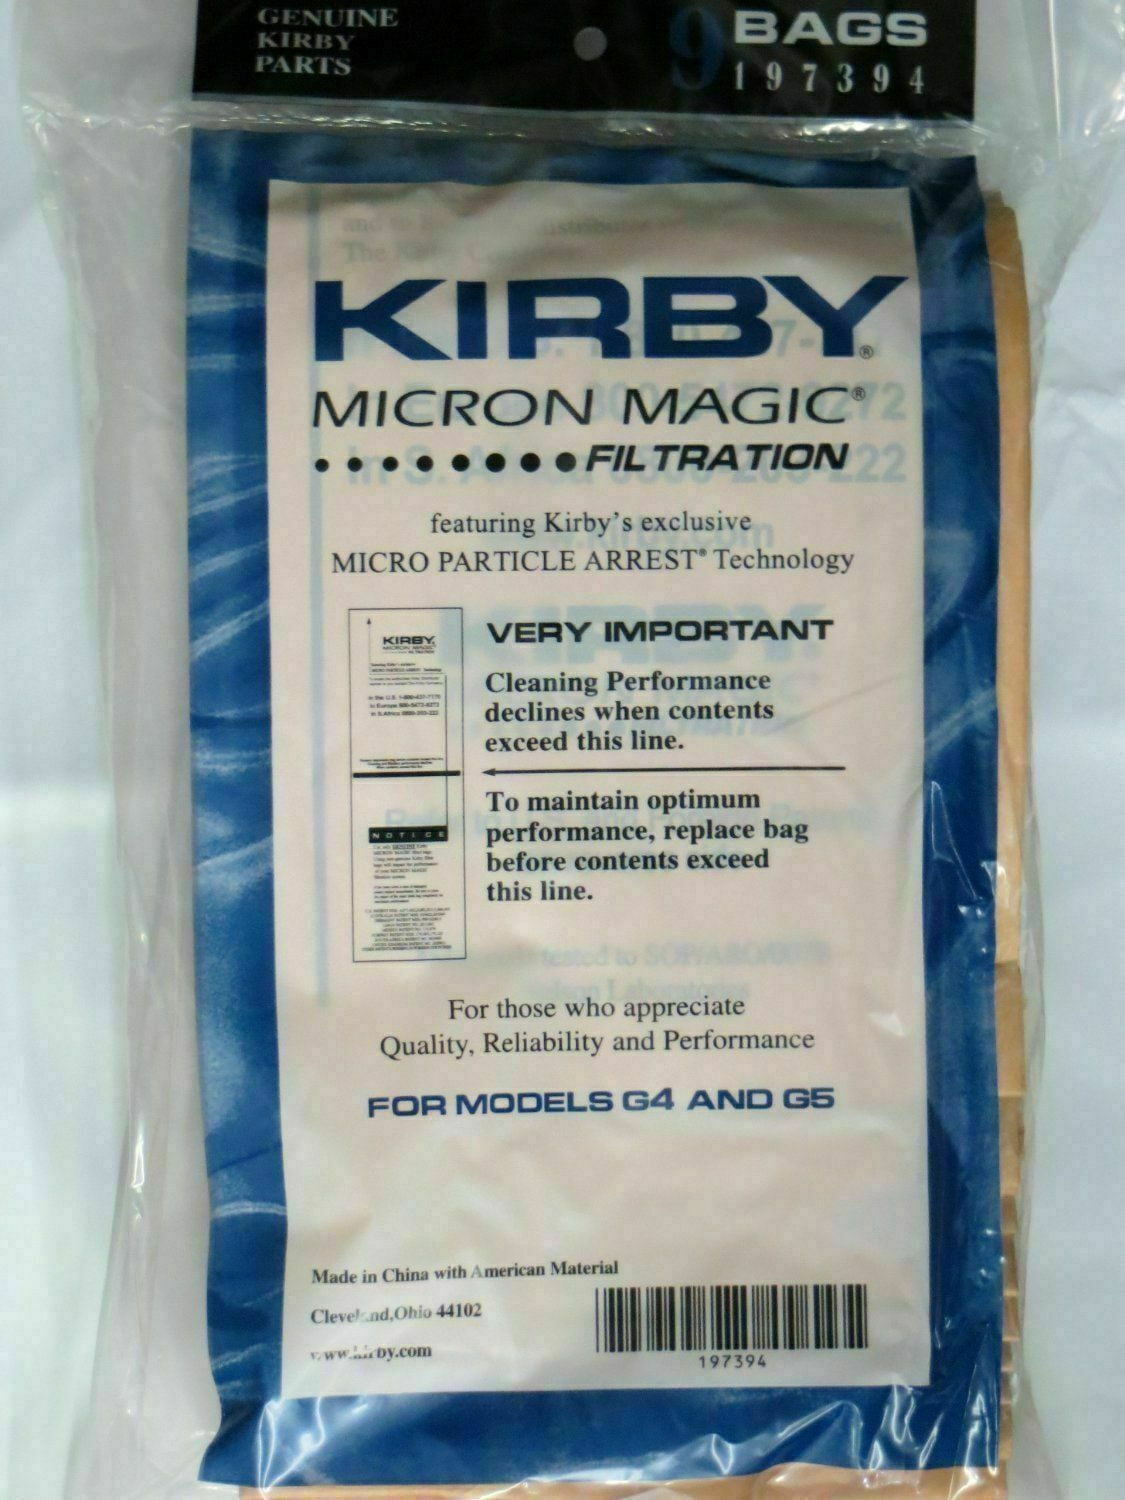 Kirby Vacuum Bags 197394 Micron Magic Vacuum Filter Bags Hoover Bags G4 G5 x 9 